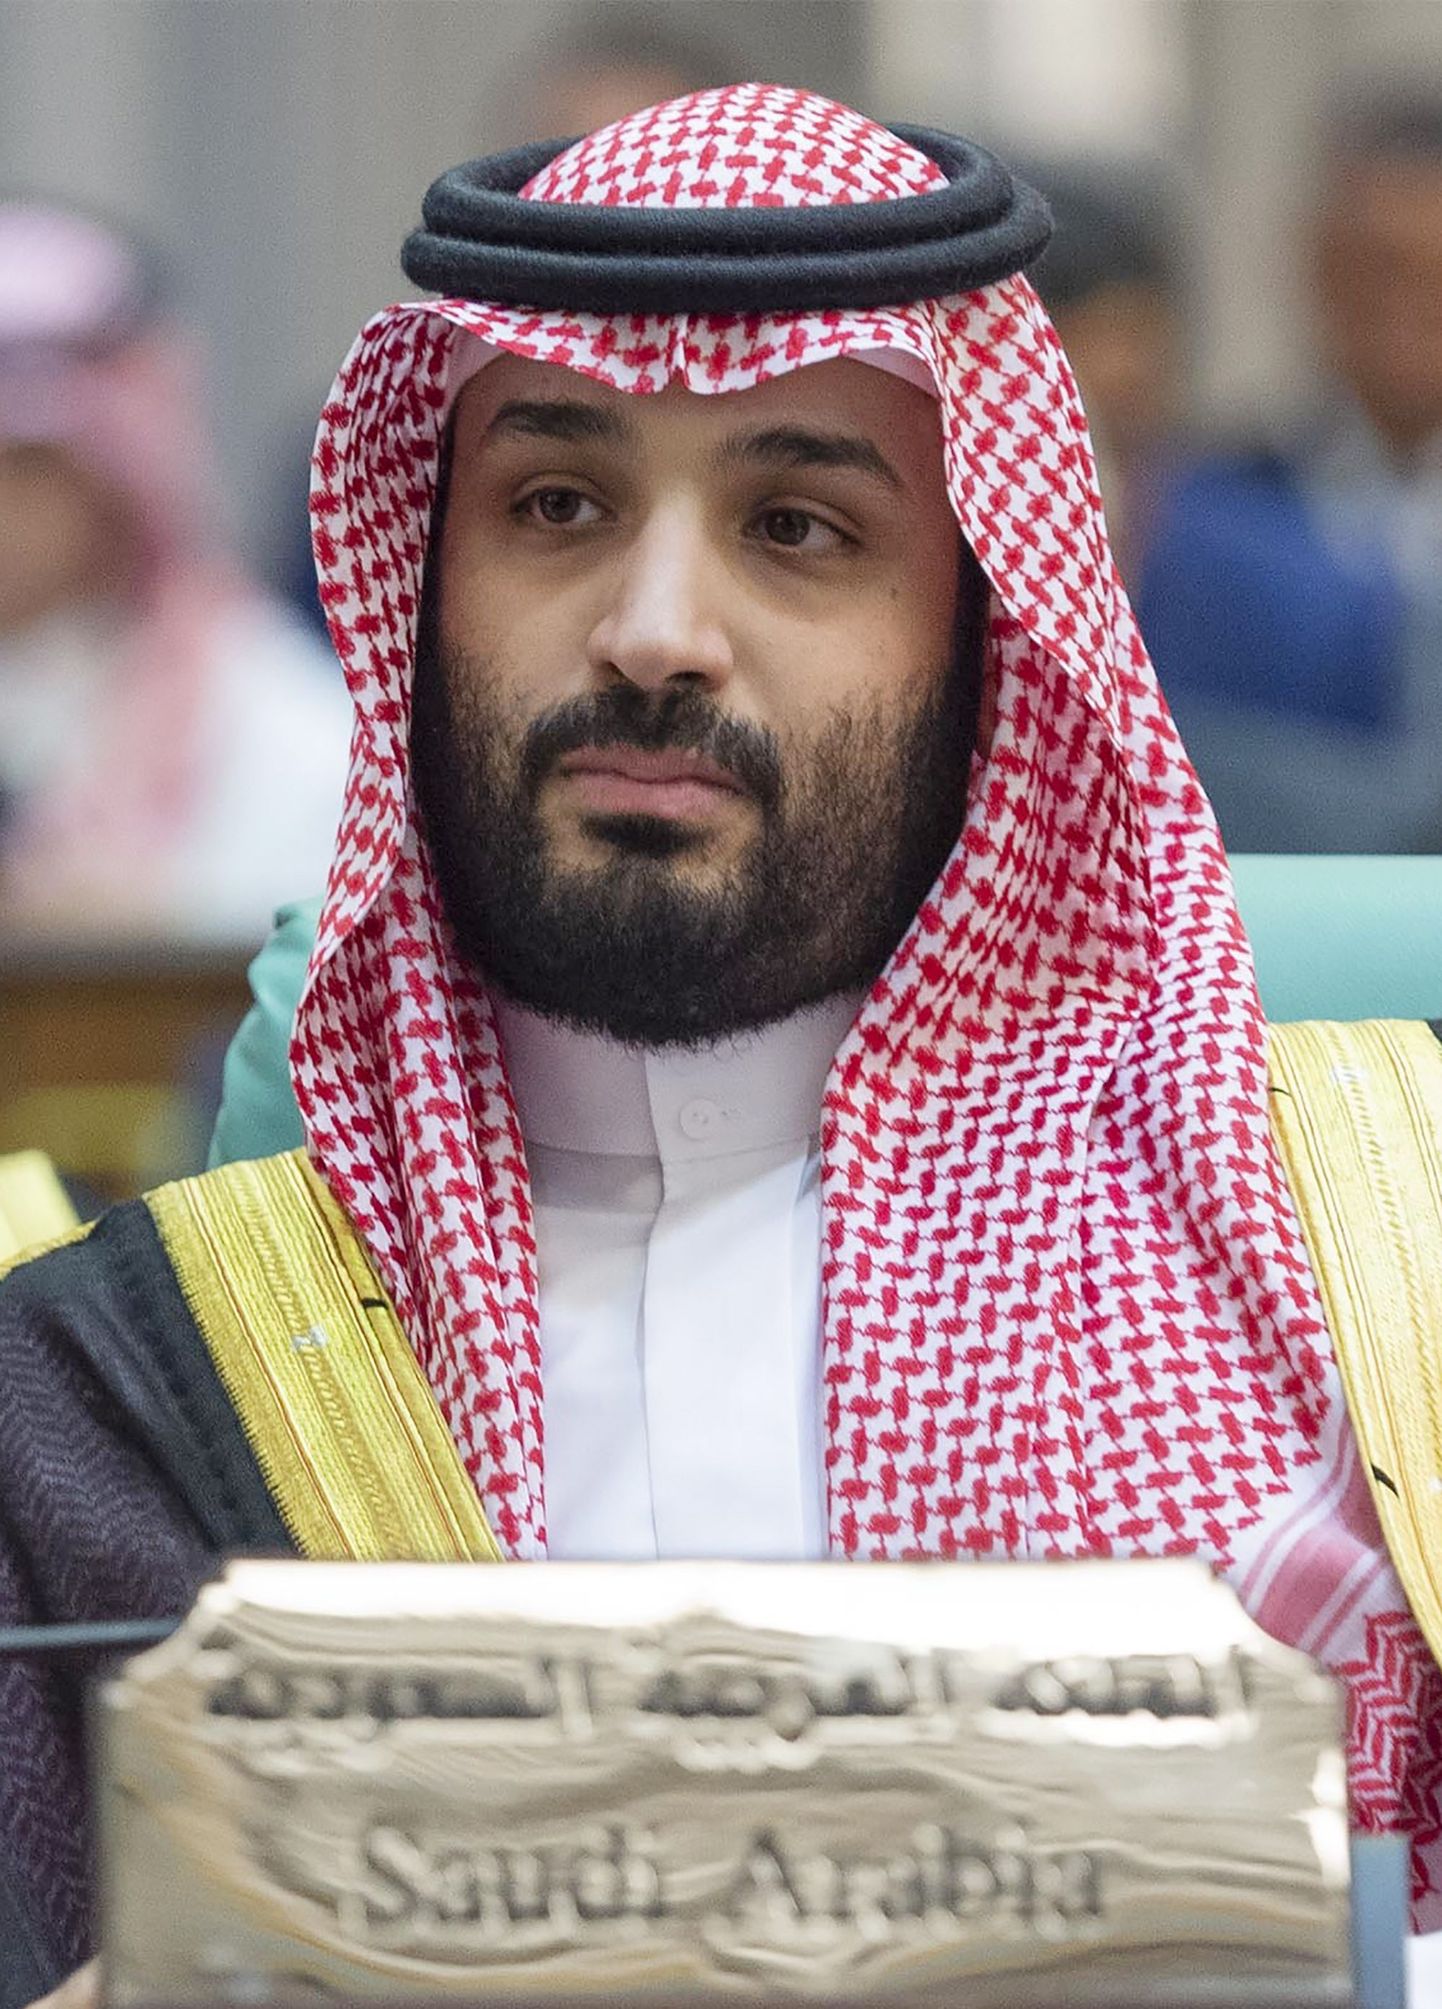 Saudi Araabia kroonprints Mohammed bin Salman, tema õde Hassa bint Salman saadetakse Prantsusmaal kohtu ette.